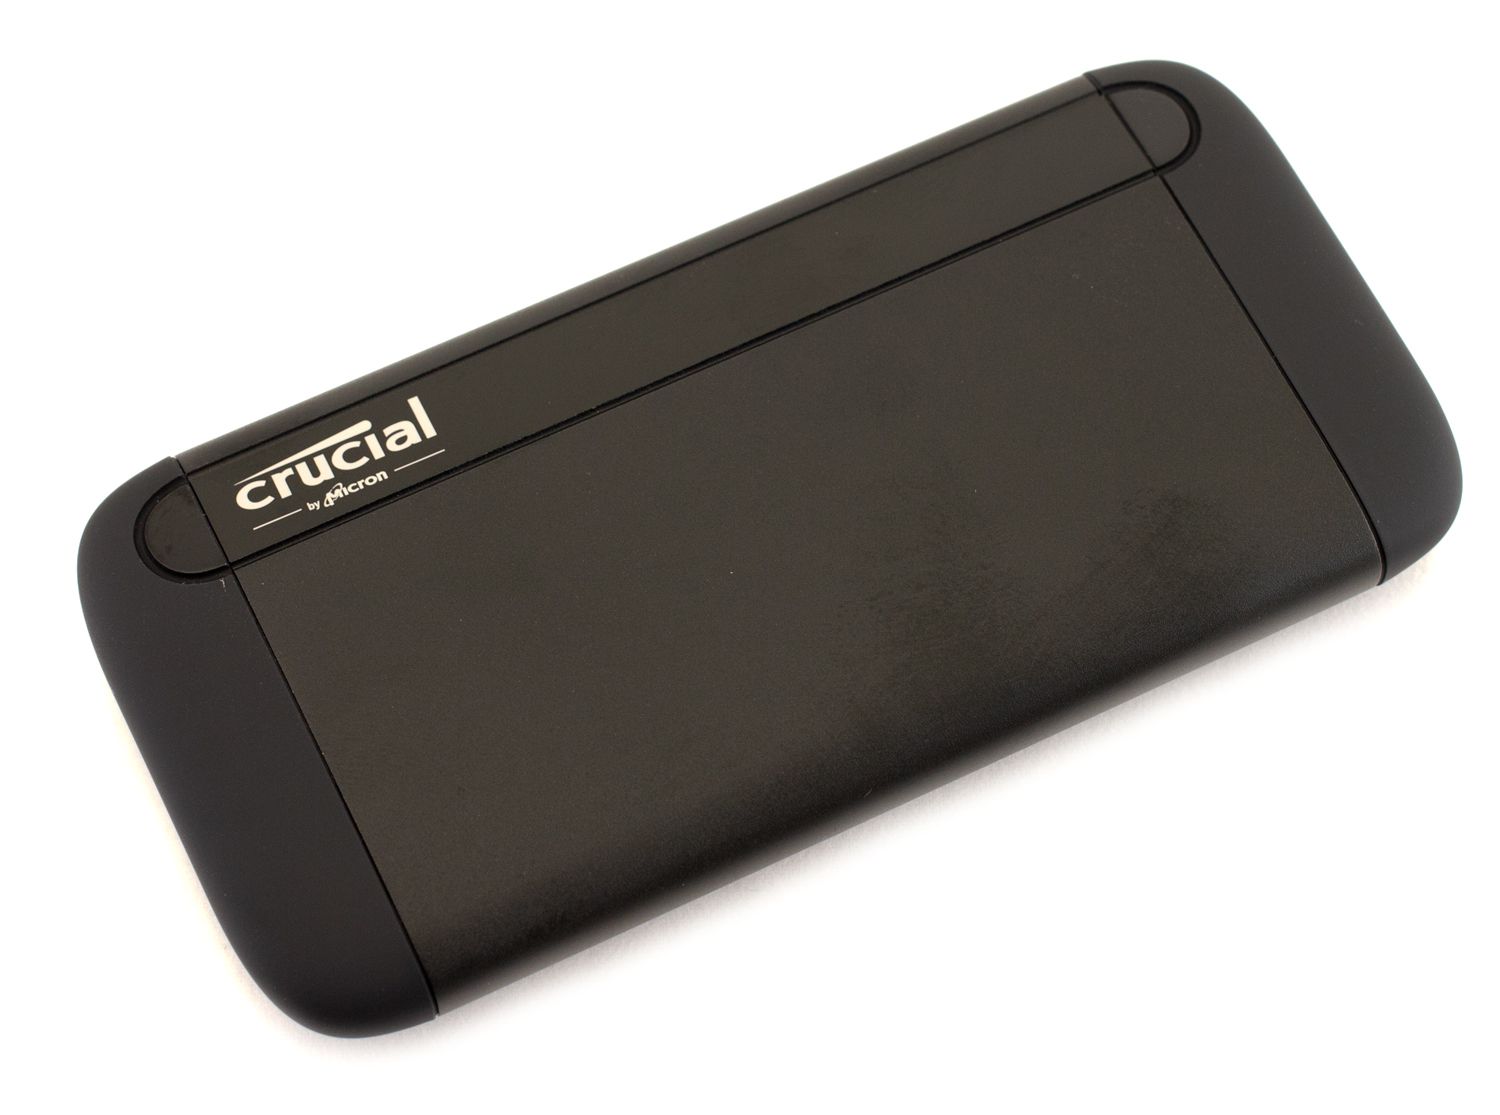 Crucial X8 2TB Portable External SSD